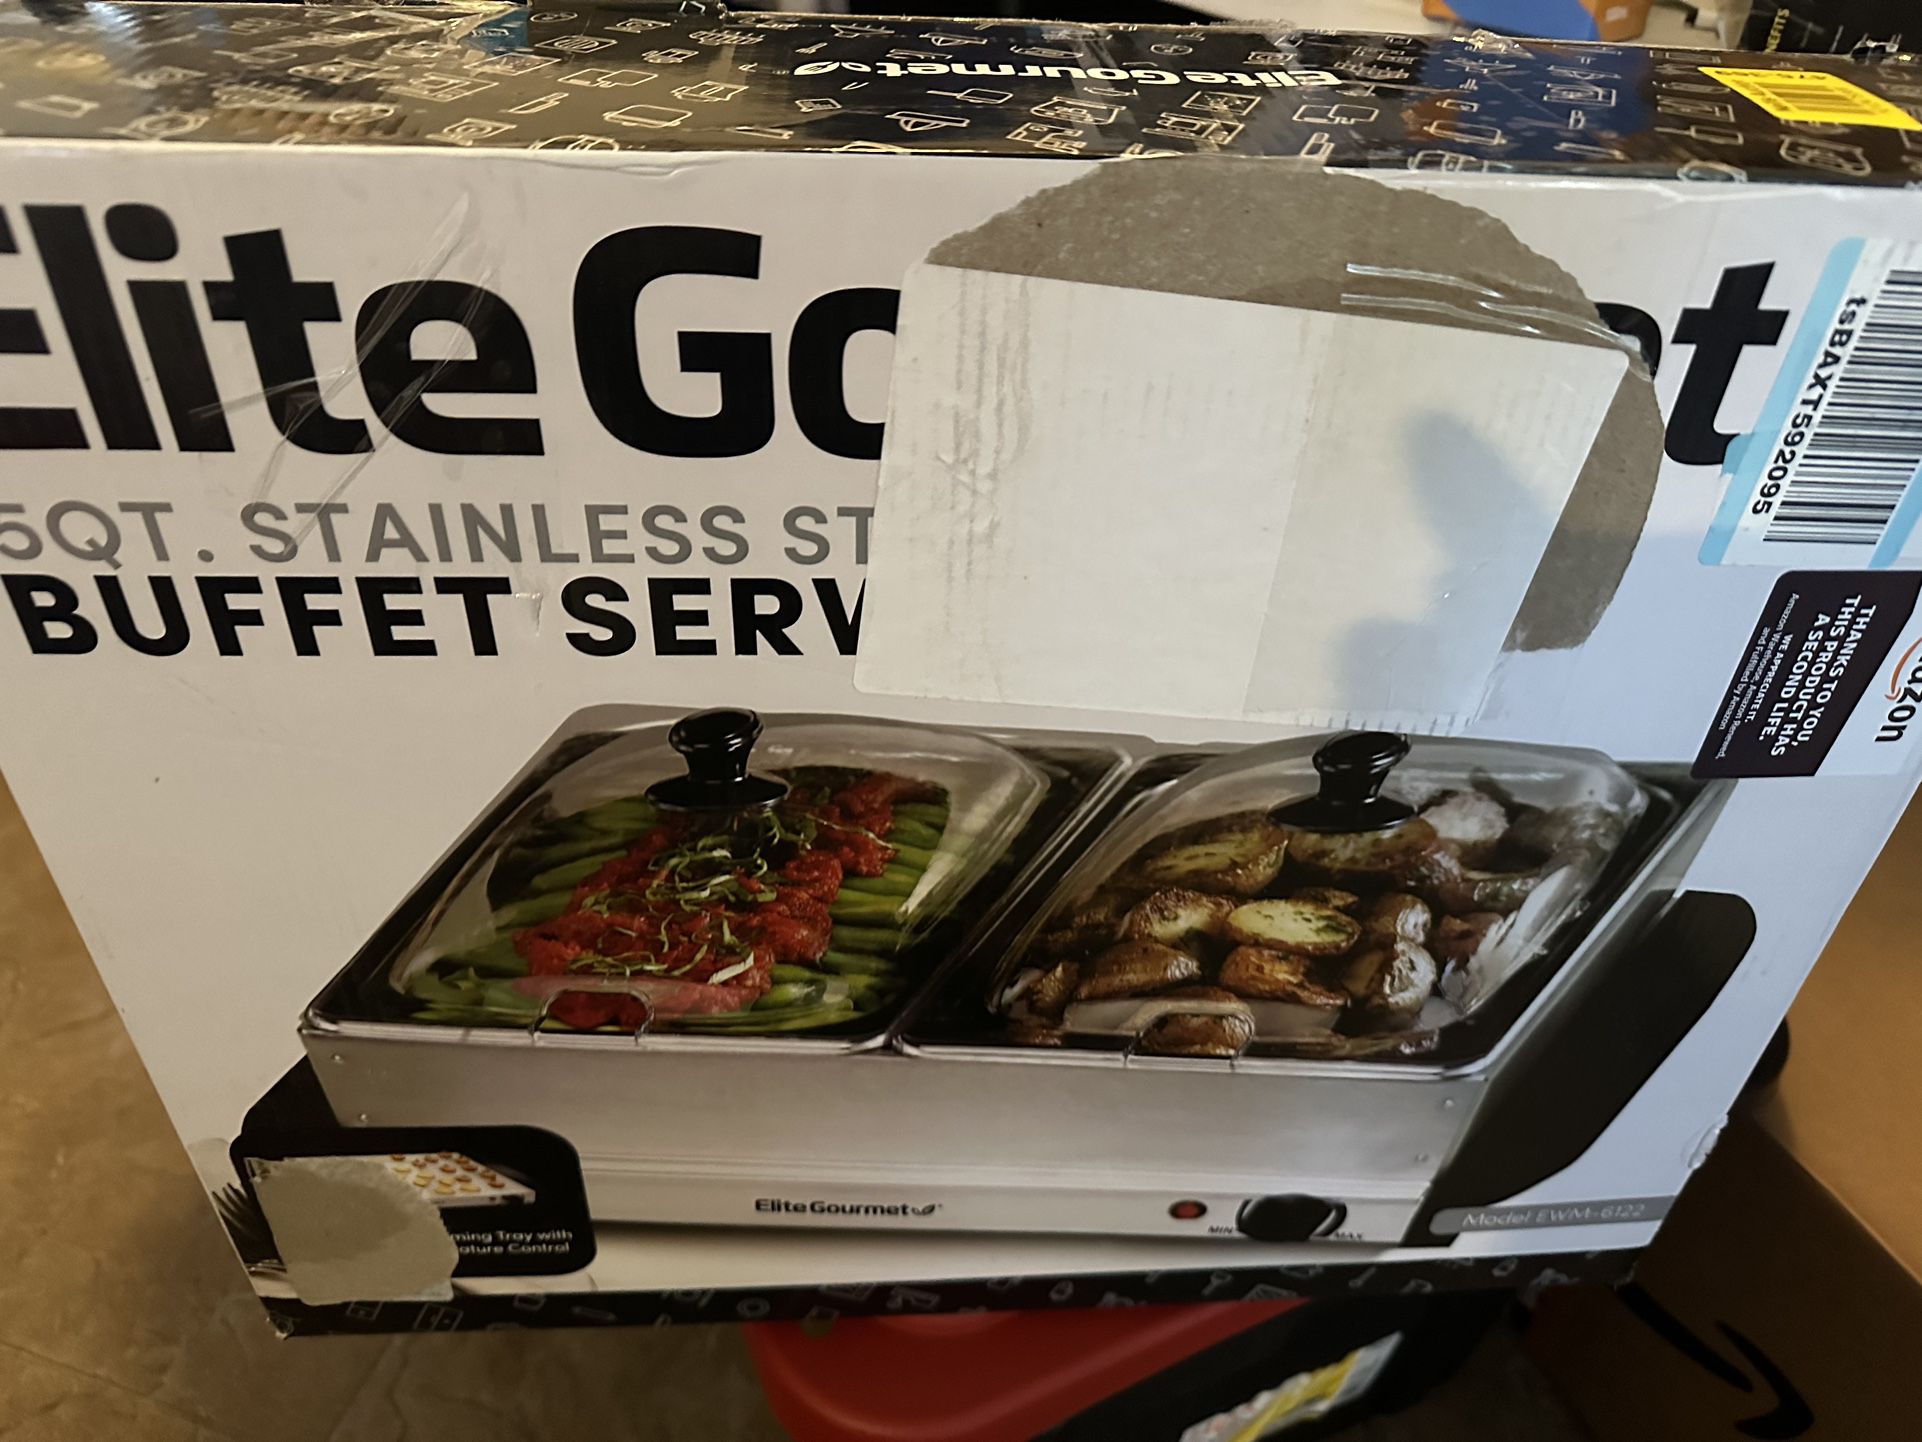 Elite Gourmet Buffet Server for Sale in Port Richey, FL - OfferUp